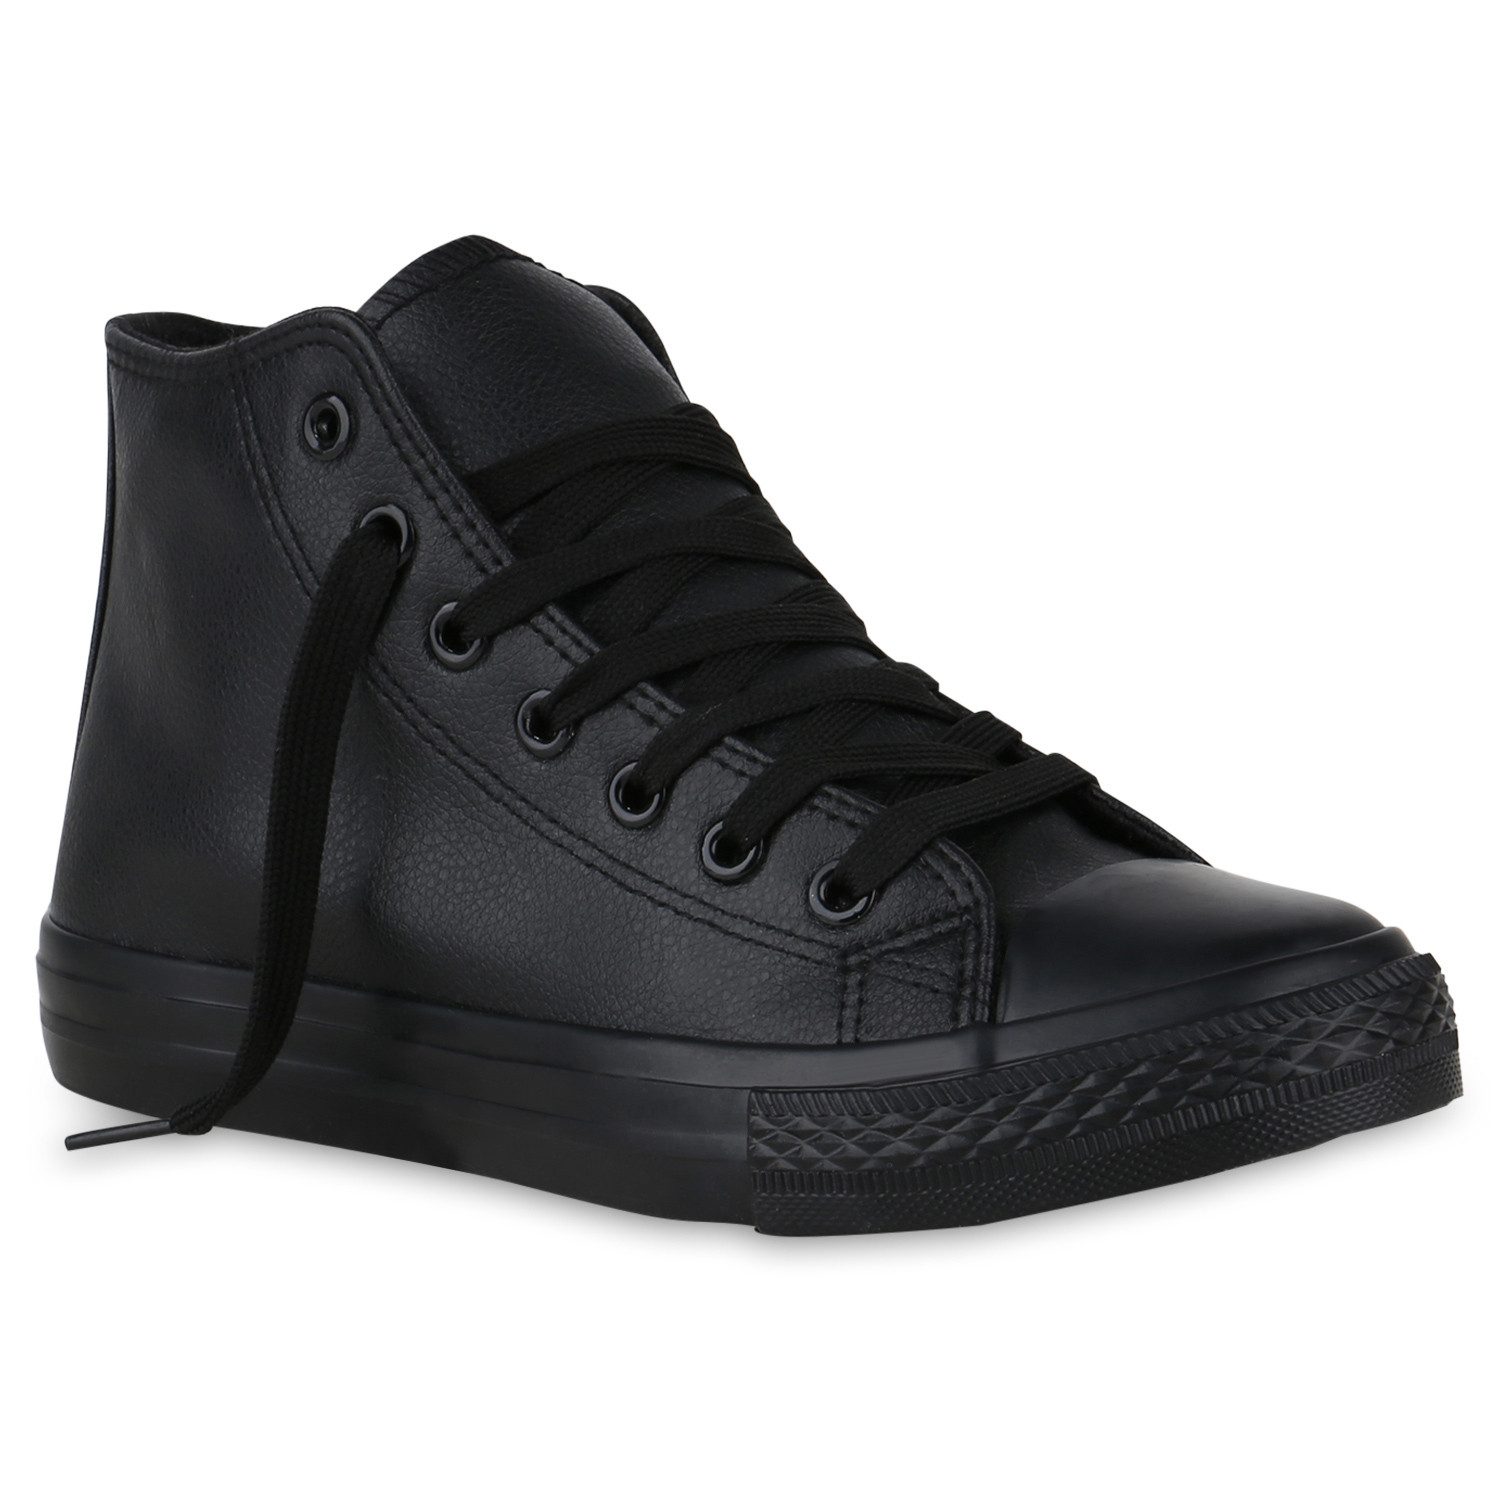 VAN HILL 841218 Sneaker Schuhe